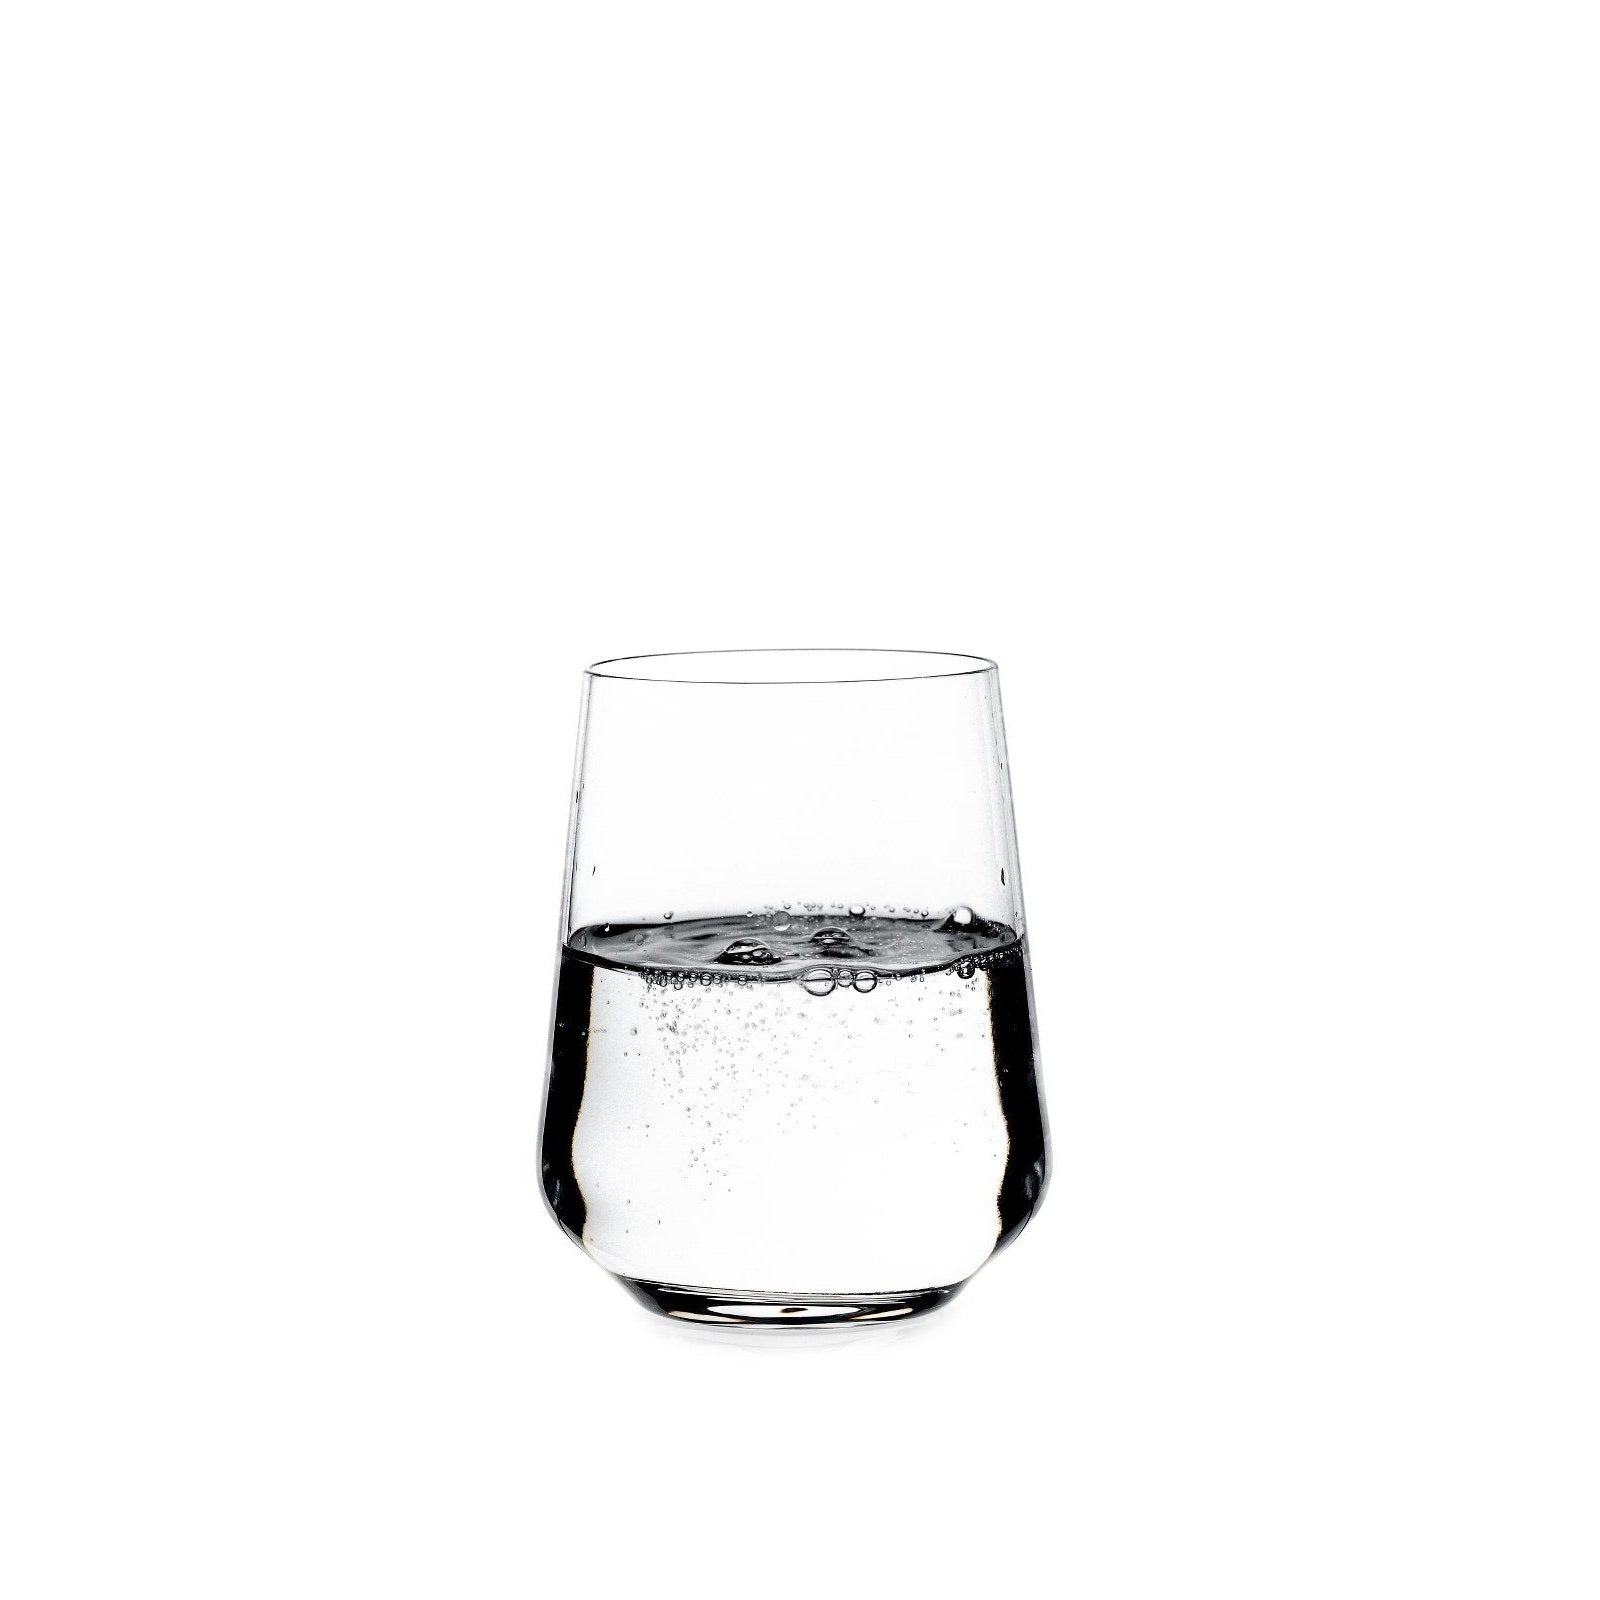 Iittala Essence Water Glass Ready 2 PCs, 35Cl